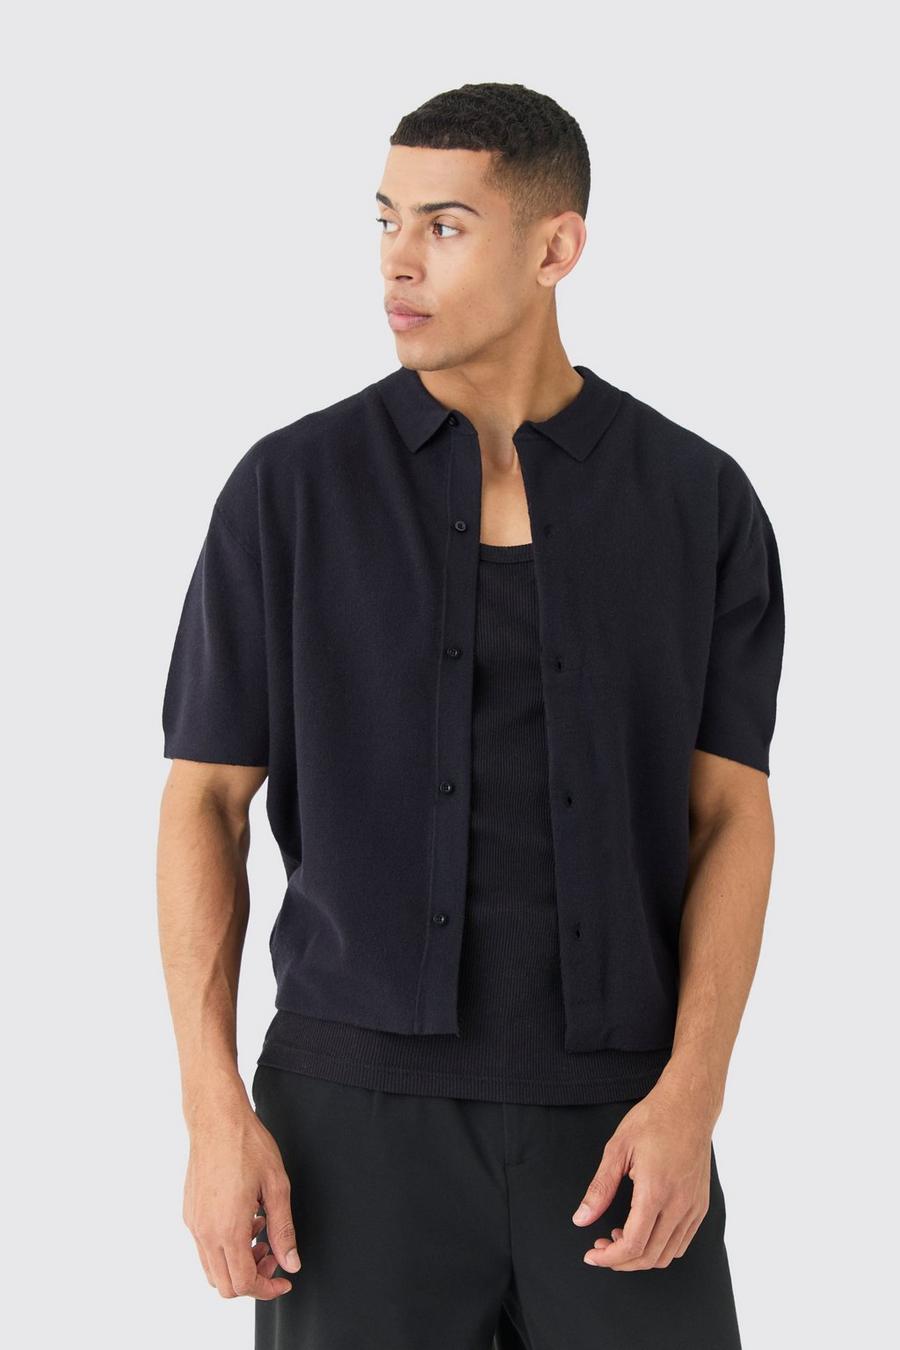 Oversized Boxy Fit Short Sleeve Knitted Shirt, Black